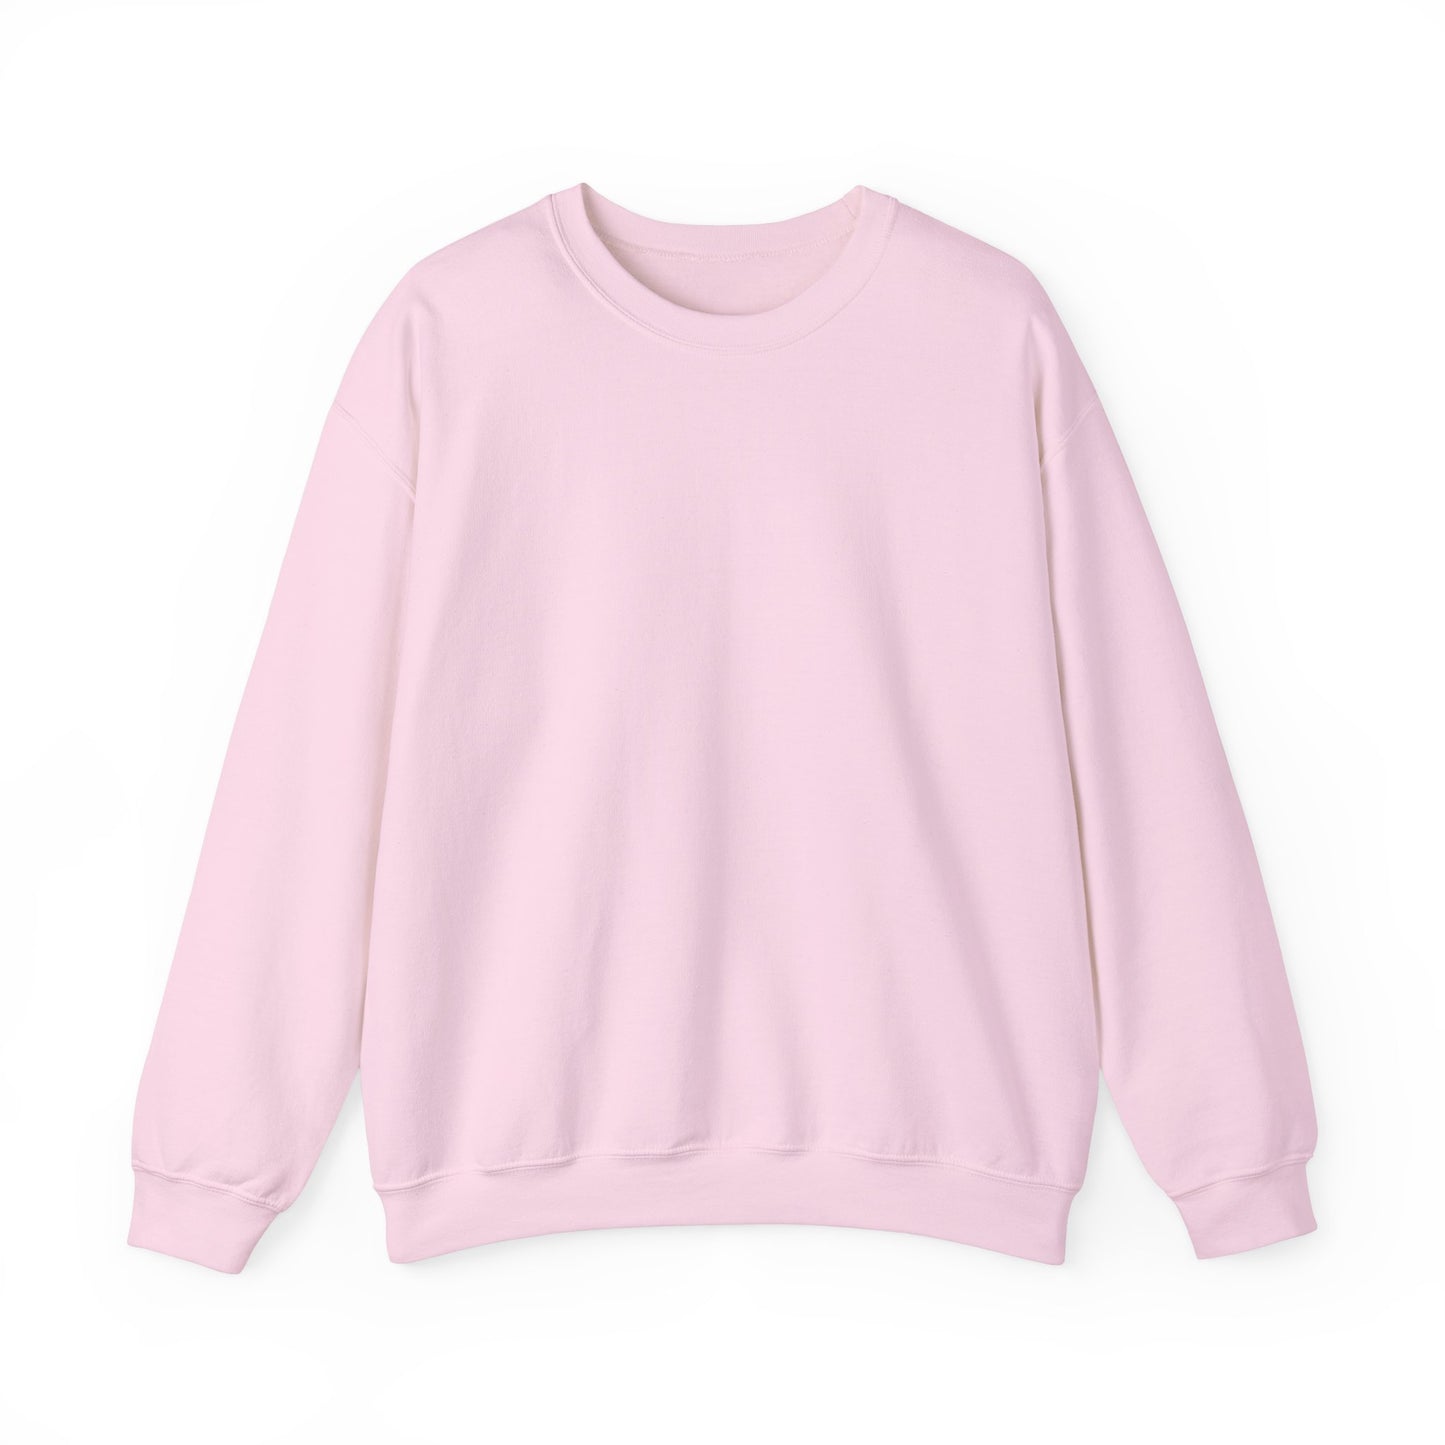 SMILE MORE pink round-neck sweatshirt - adult